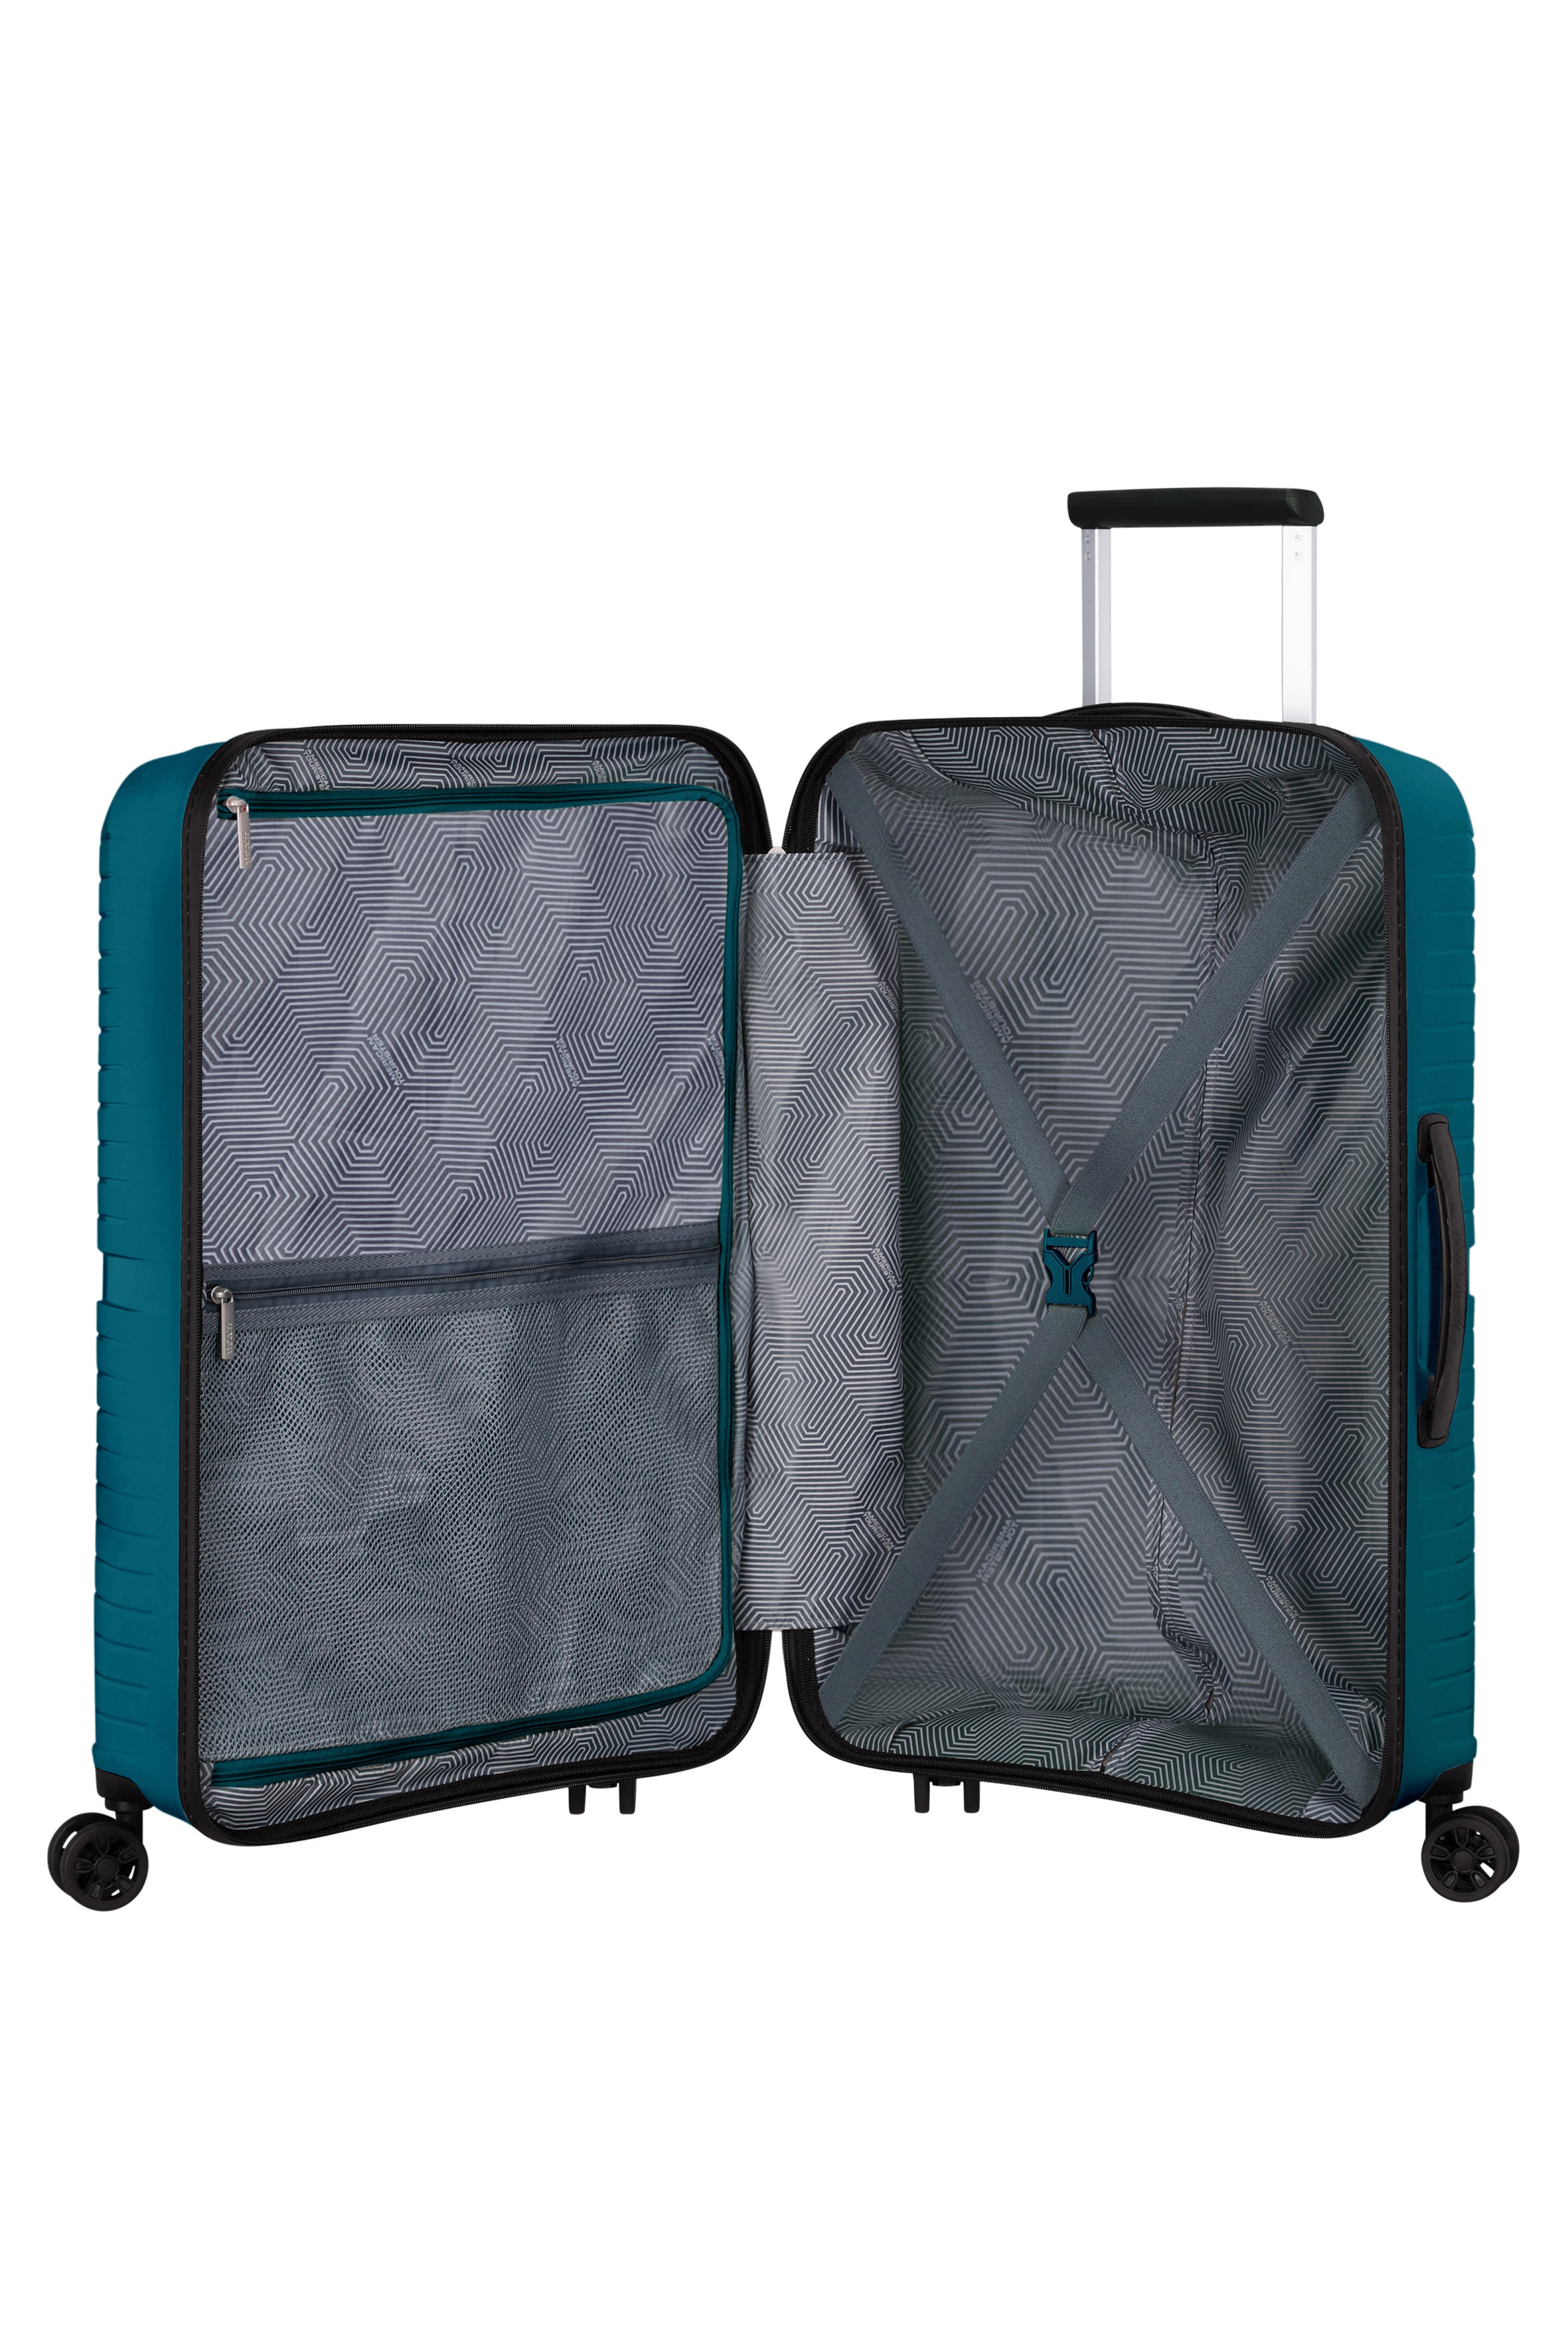 American Tourister - Airconic 67cm Medium Suitcase - Deep Ocean-6